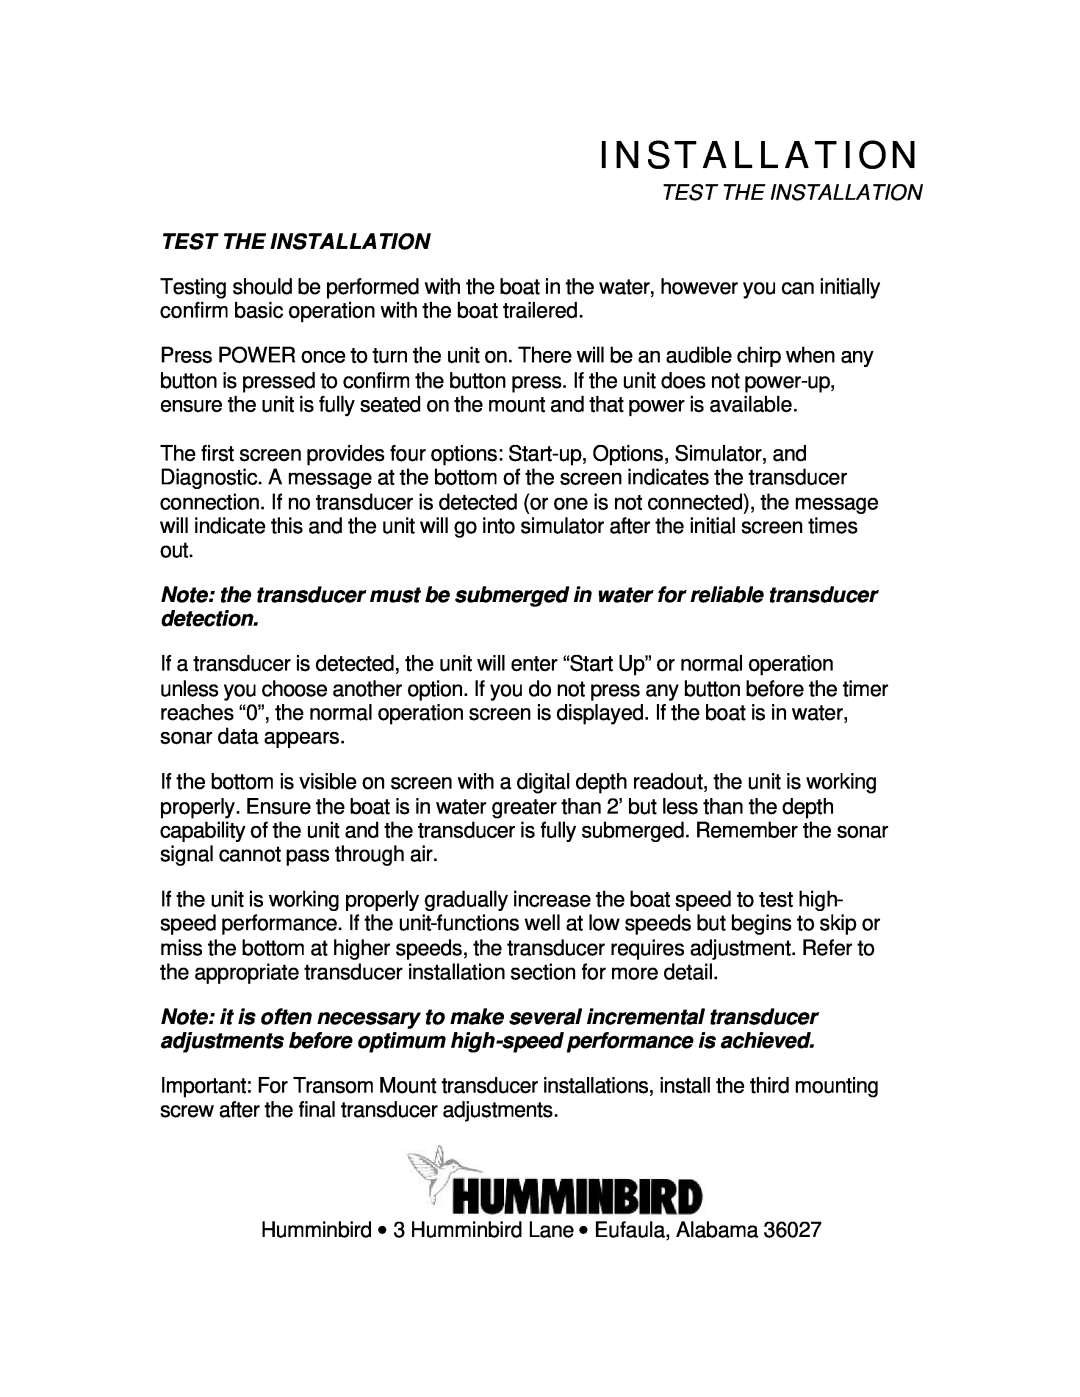 Humminbird ProFlasher manual Test The Installation 